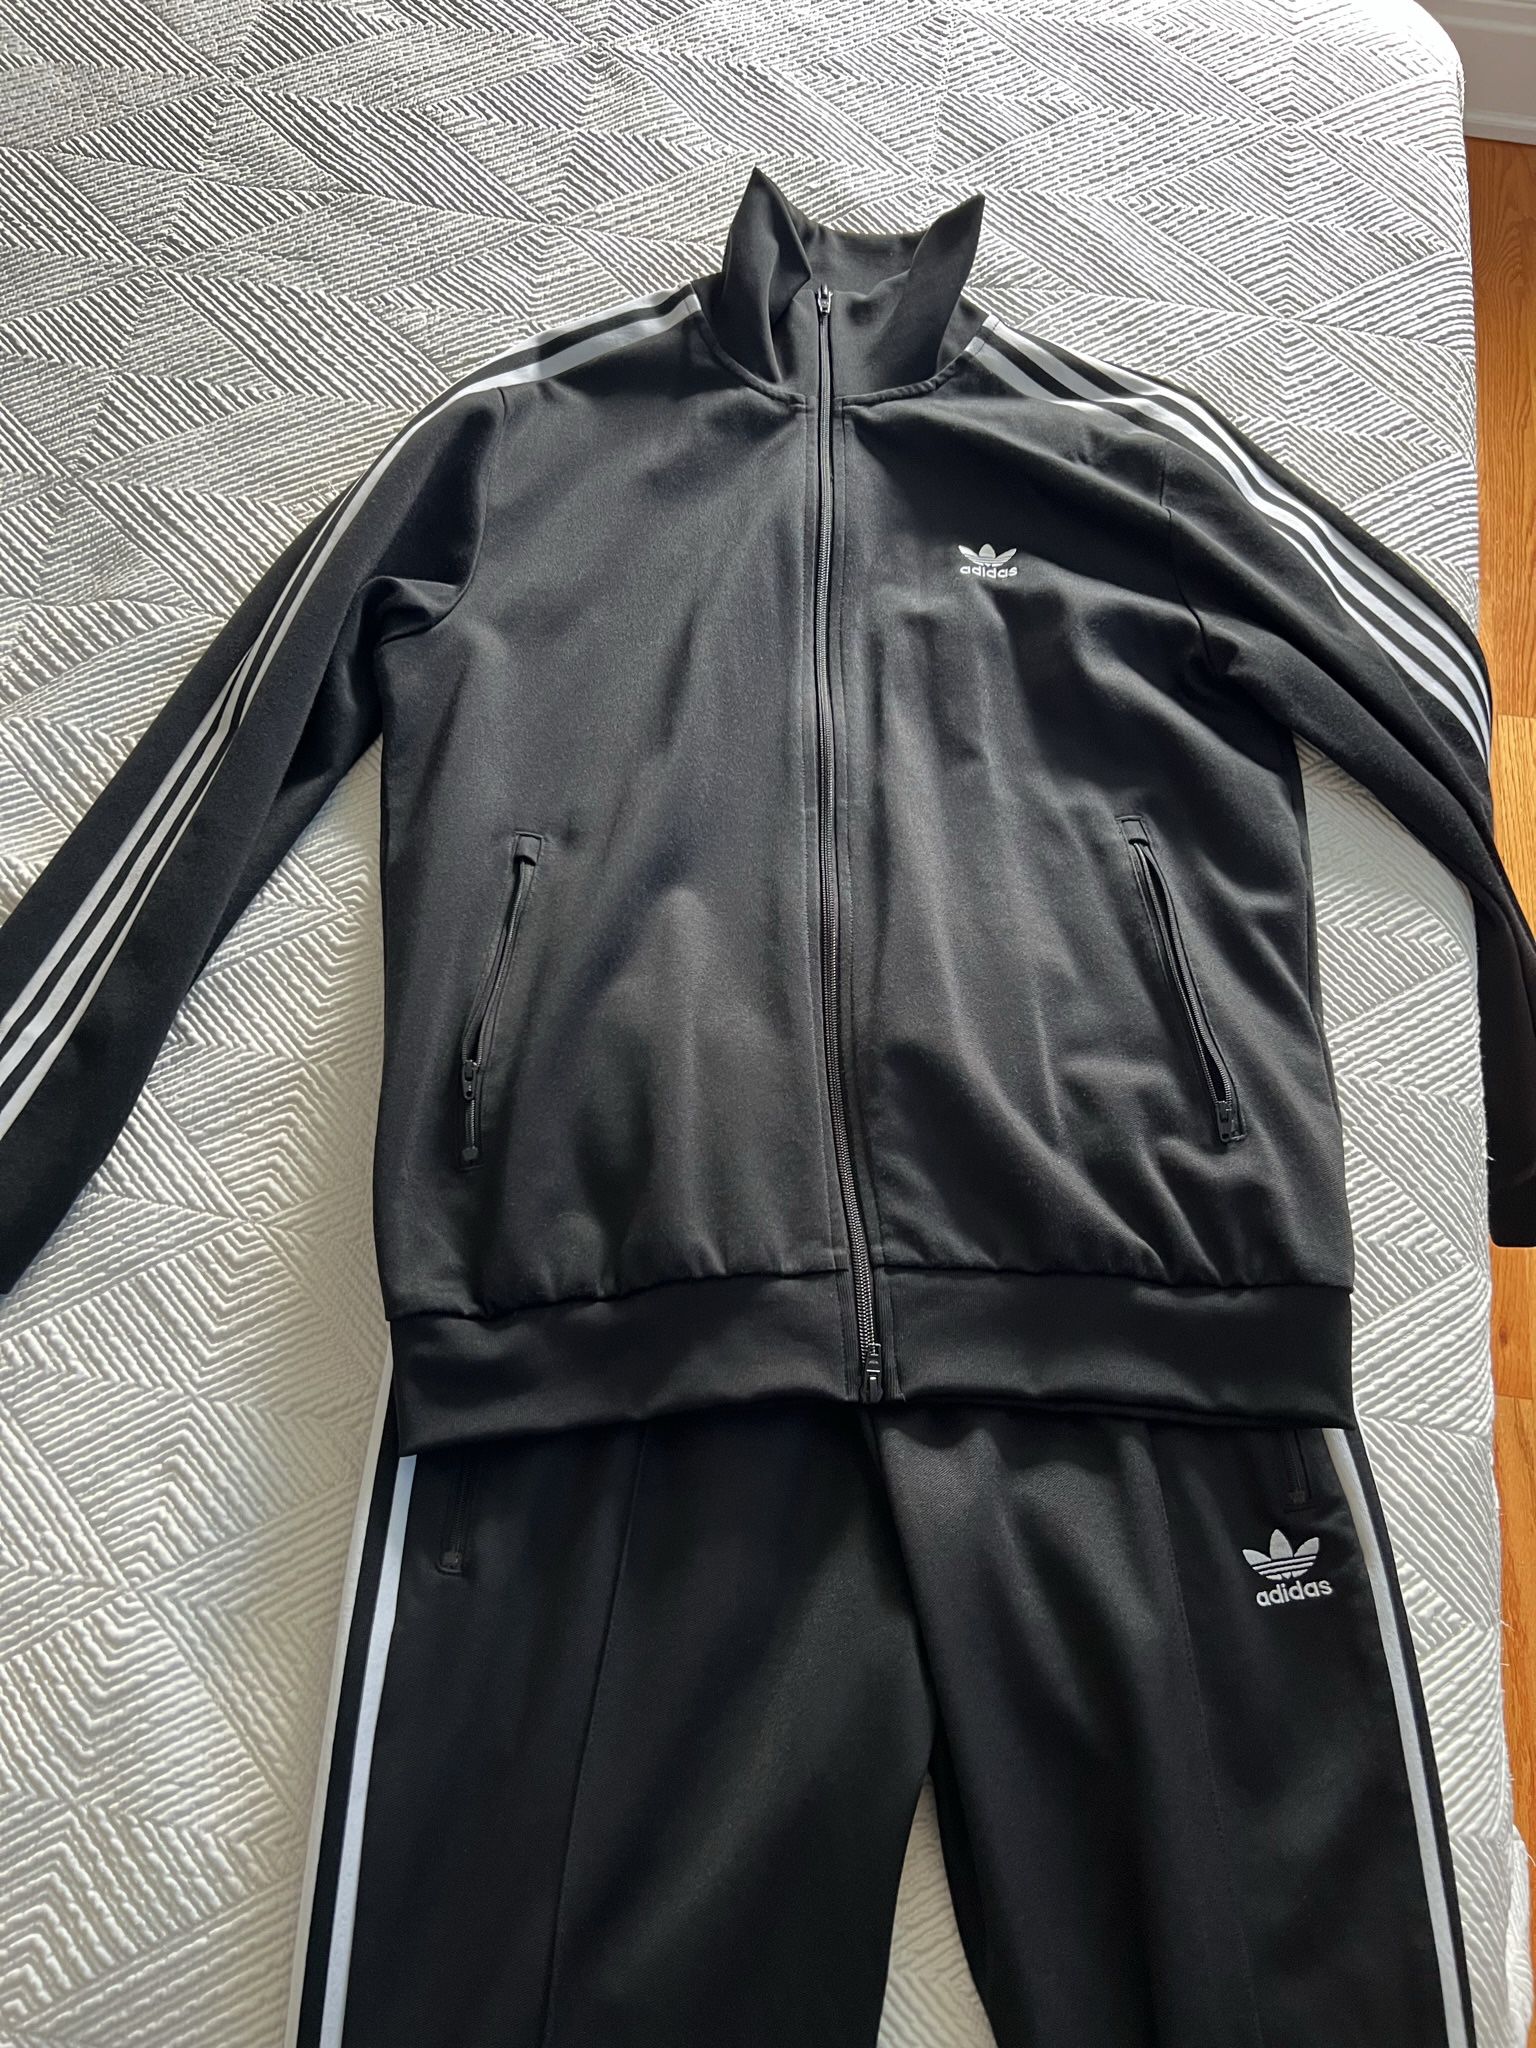 Adidas Men’s Track Suit - Large - Like NEW